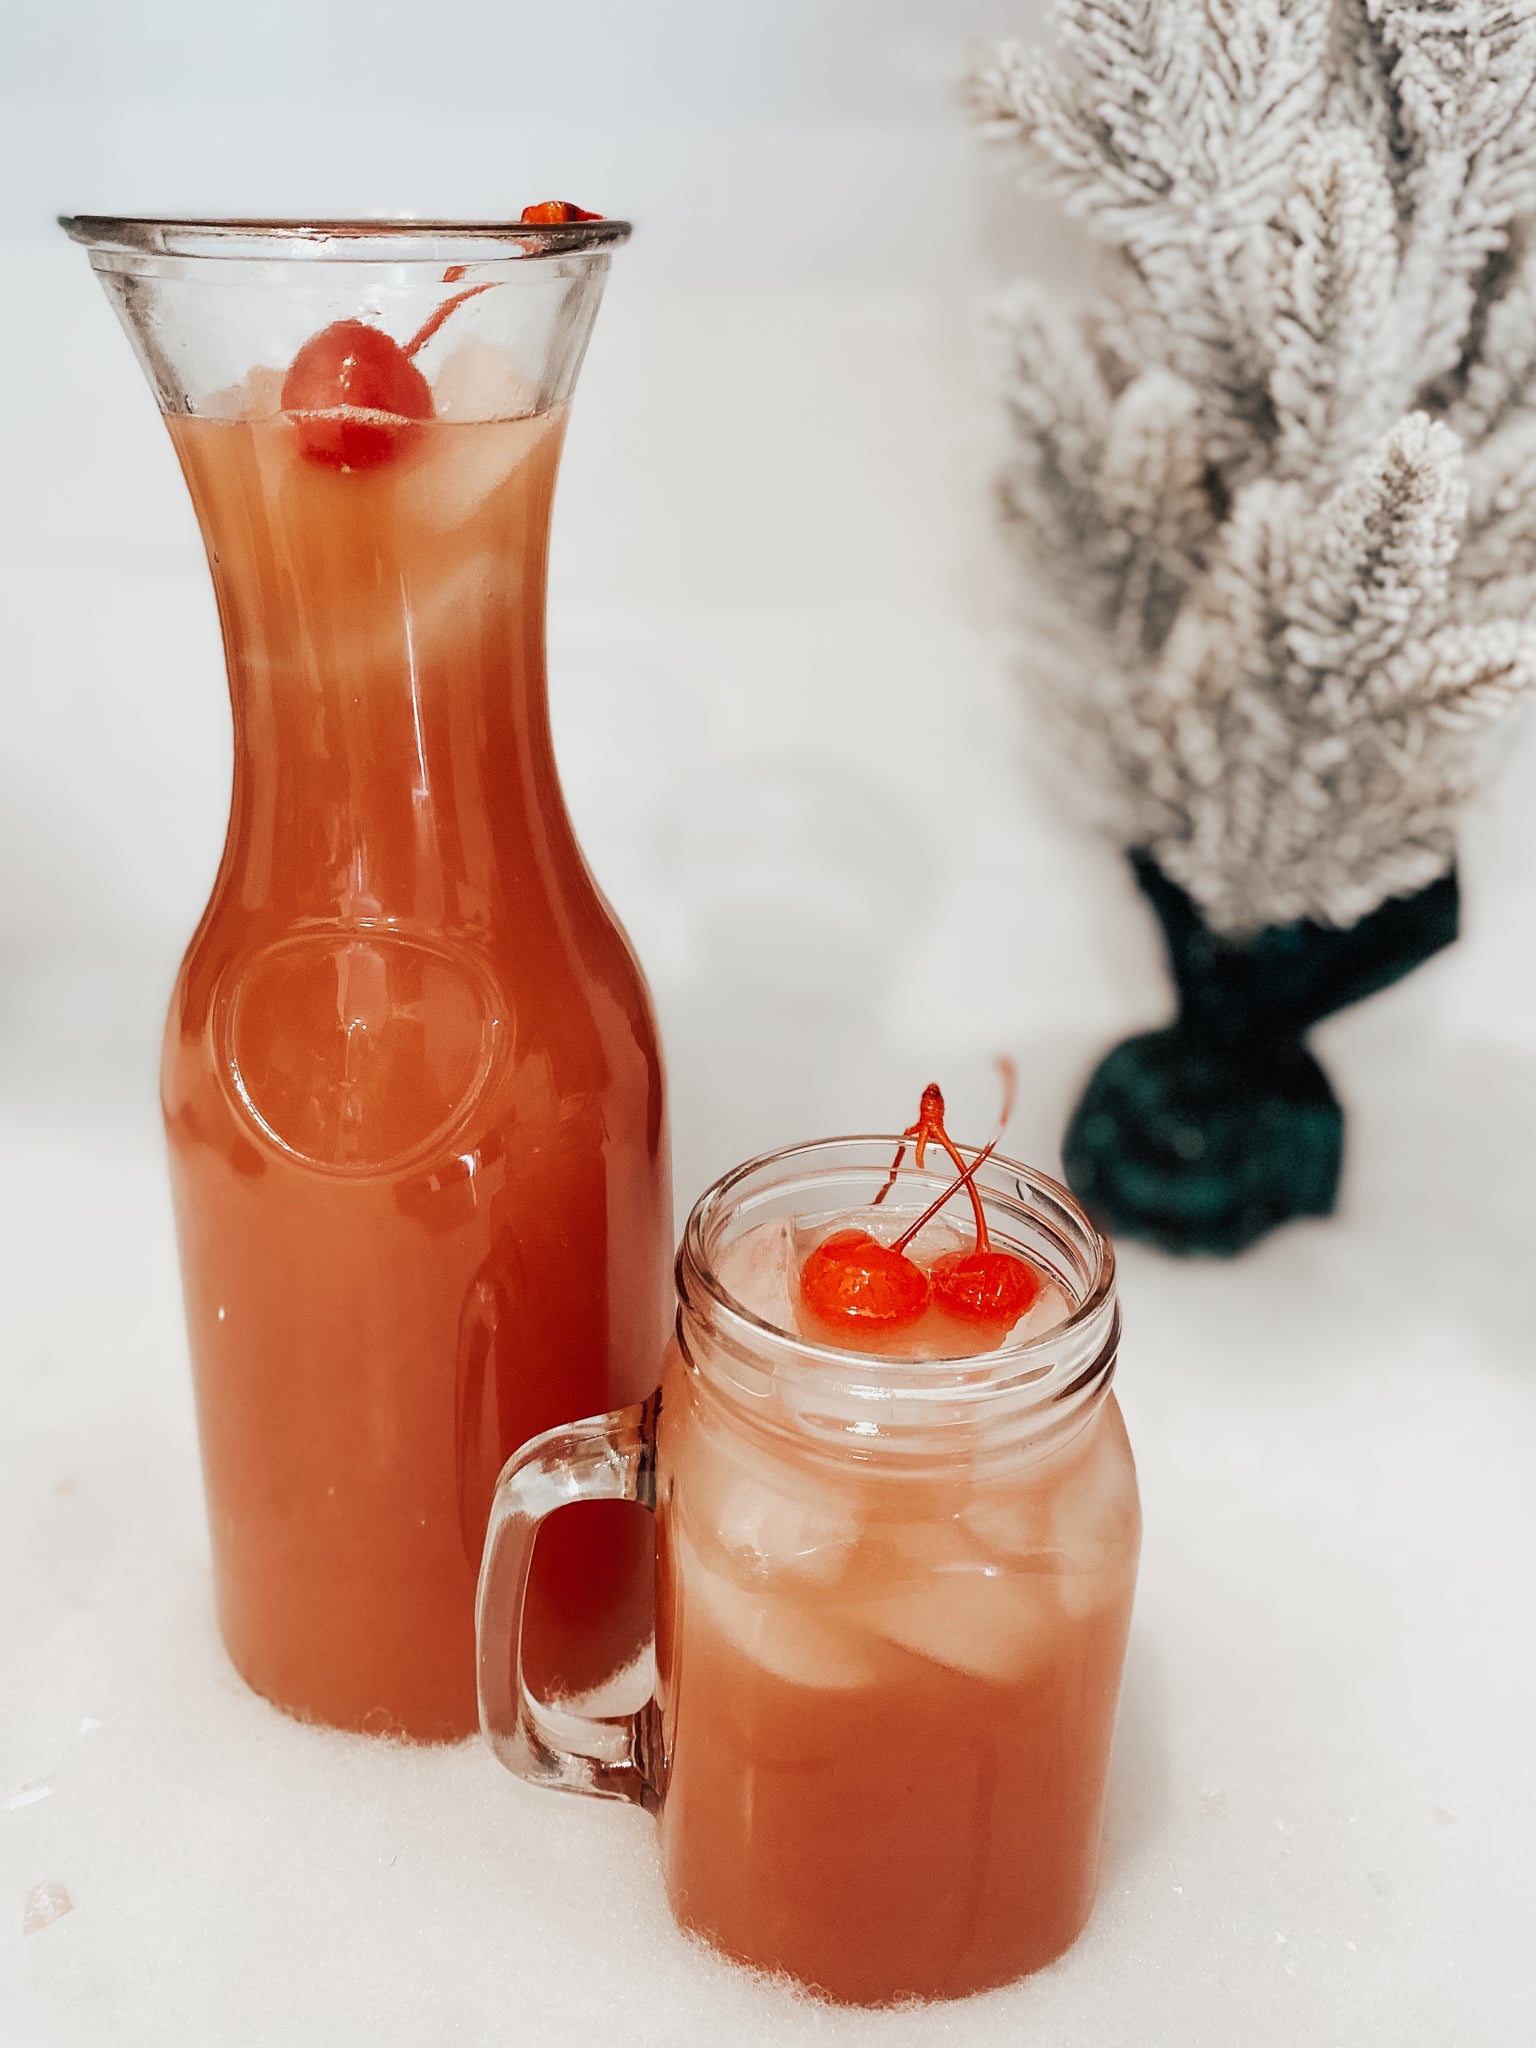 Rudolph's Tipsy Spritzer Recipe - You Deserve a Delicious Drink